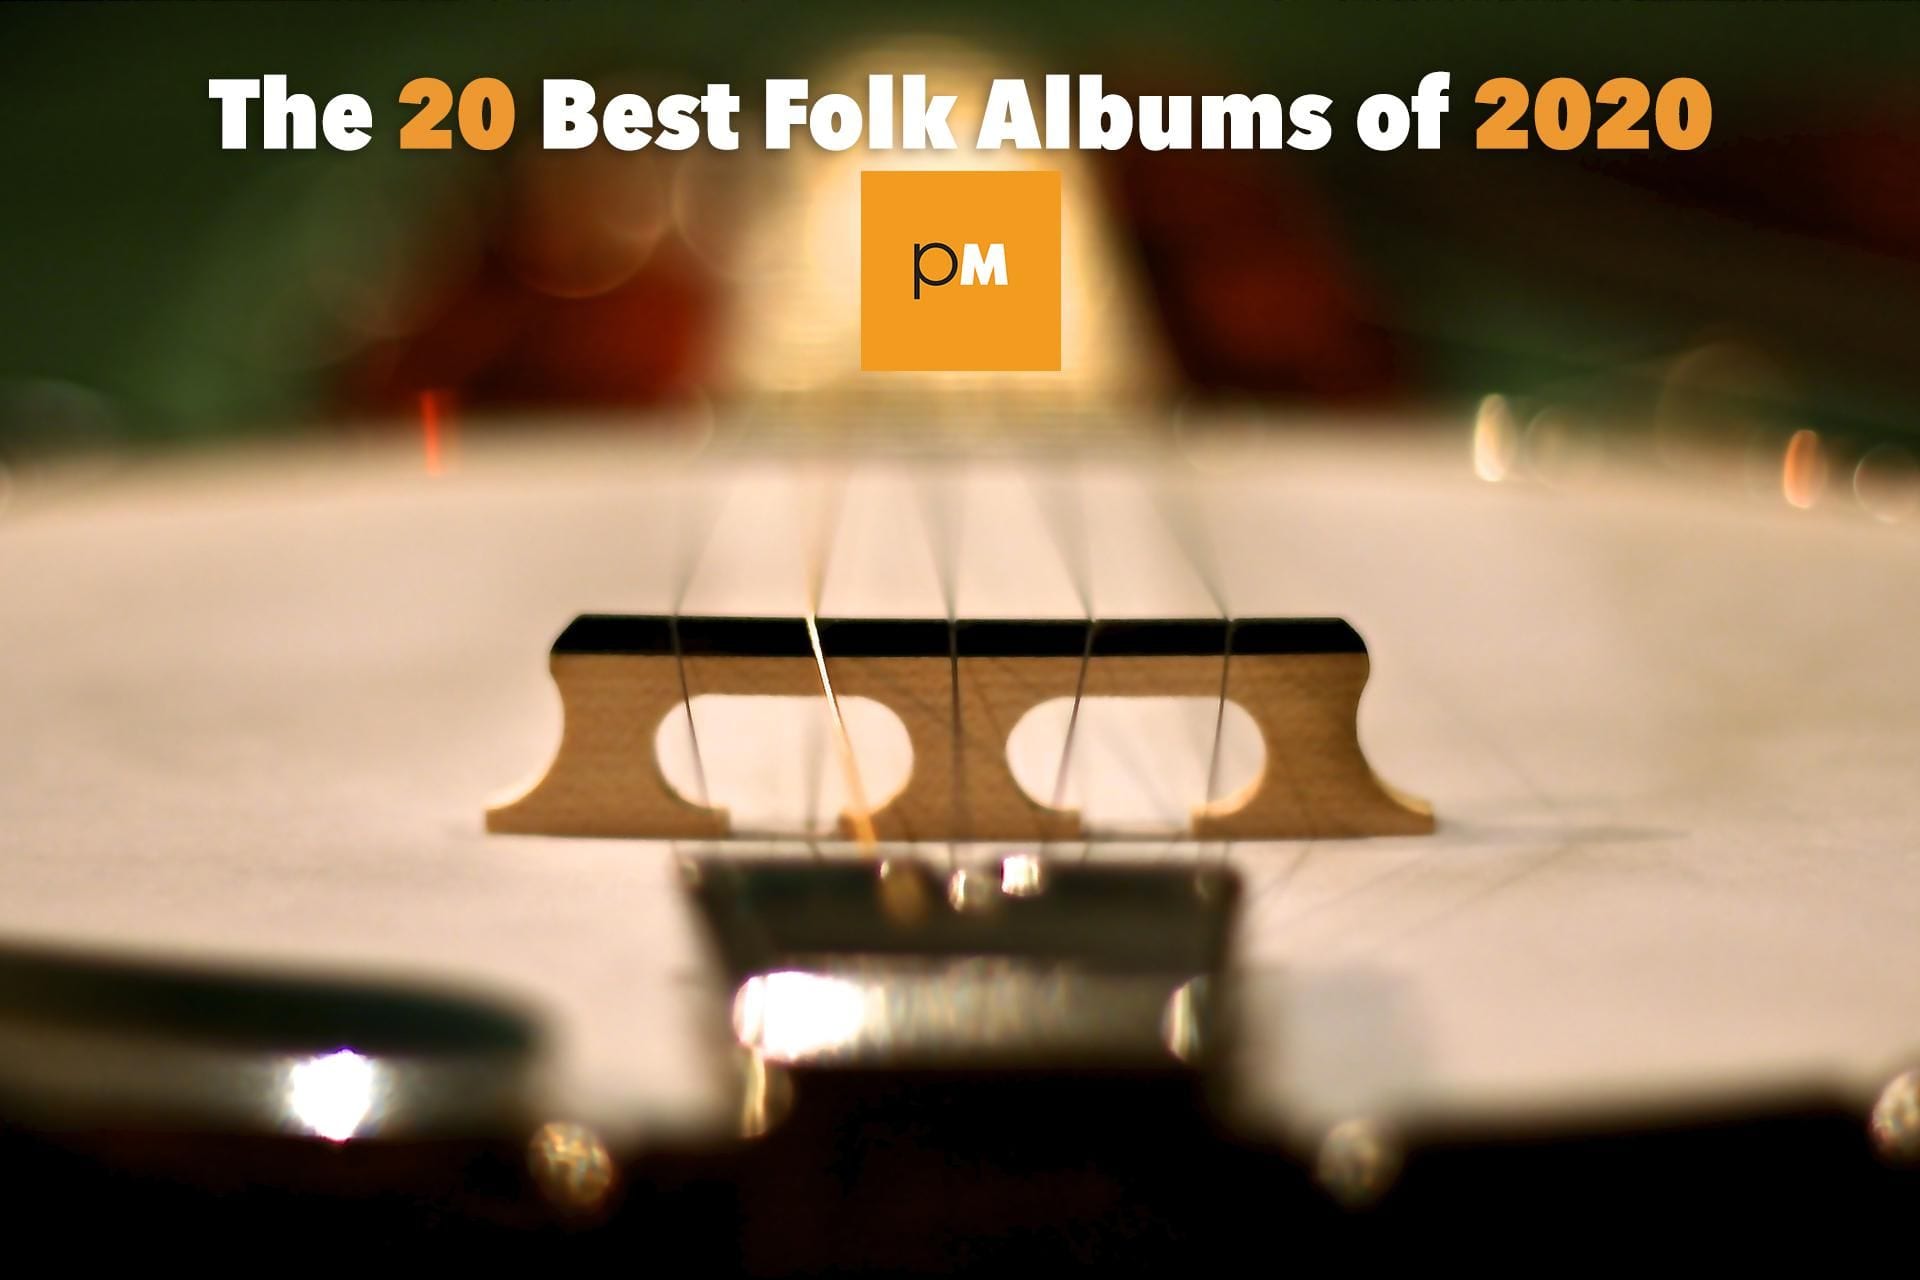 The 20 Best Folk Albums of 2020